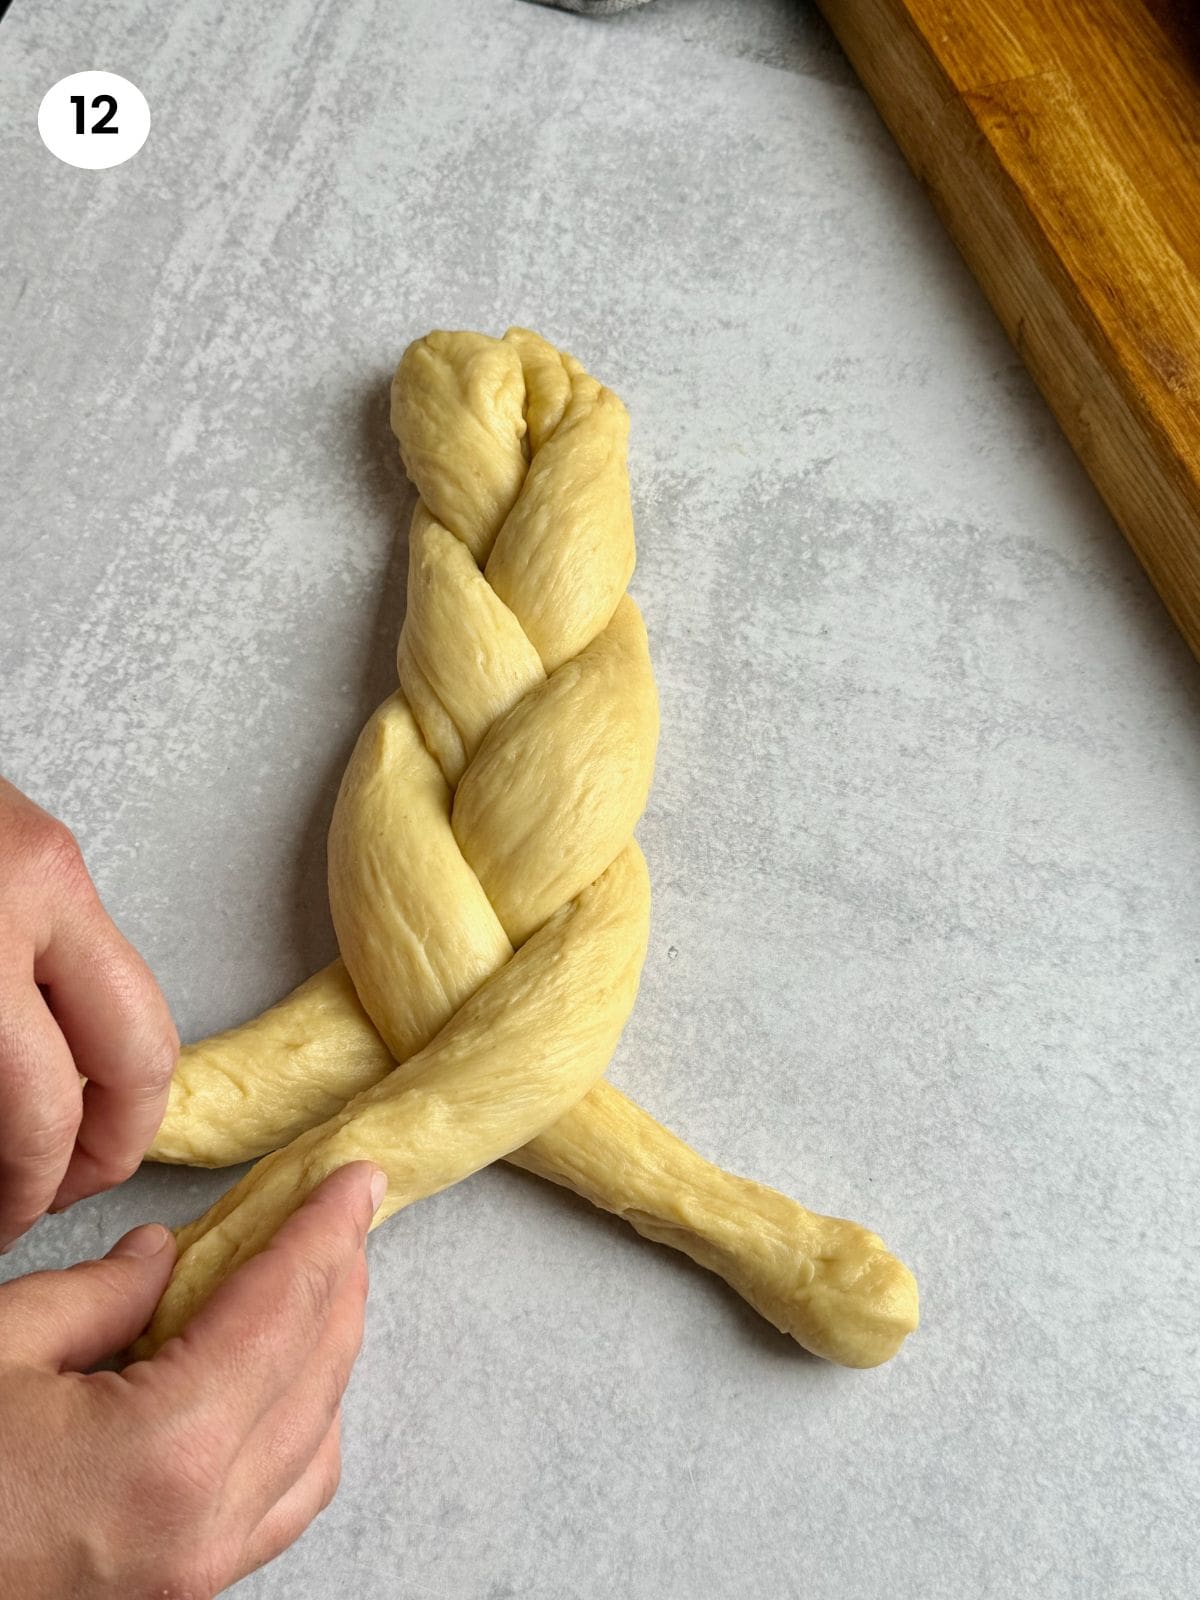 Braiding the three dough ropes.